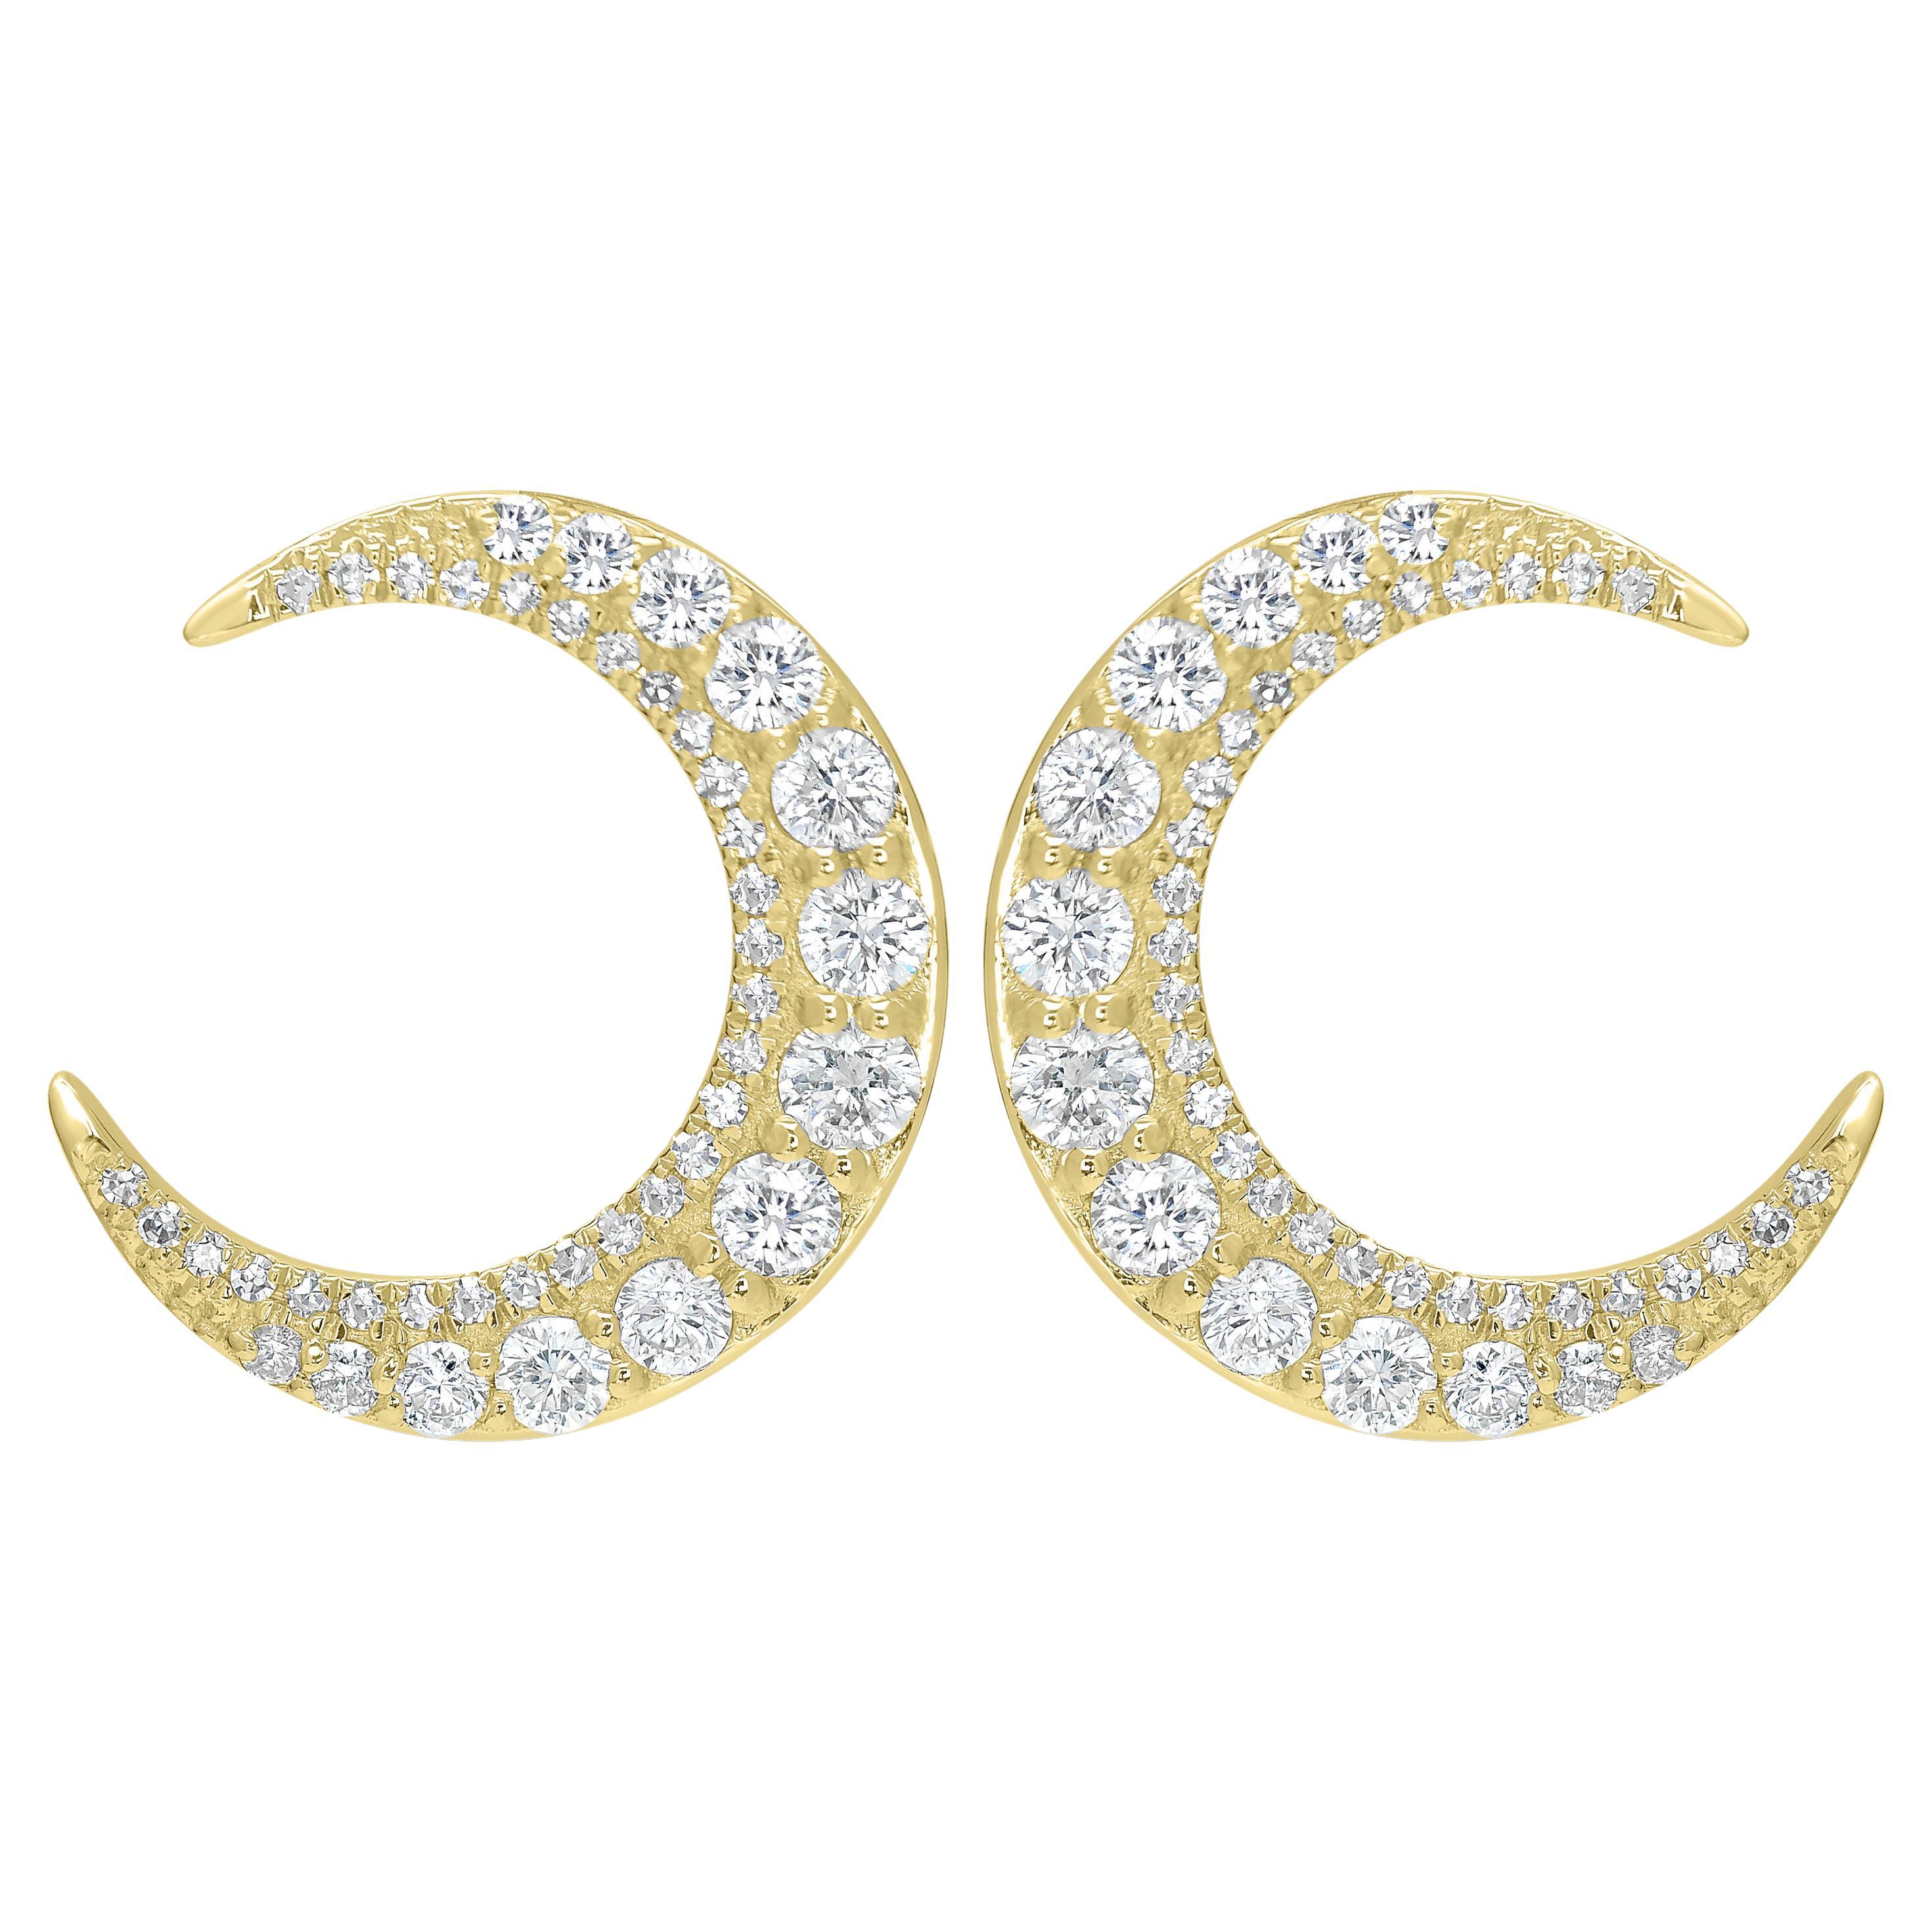 Luxle 7/8 Cttw. Diamond Crescent Moon Stud Earrings in 14k Yellow Gold